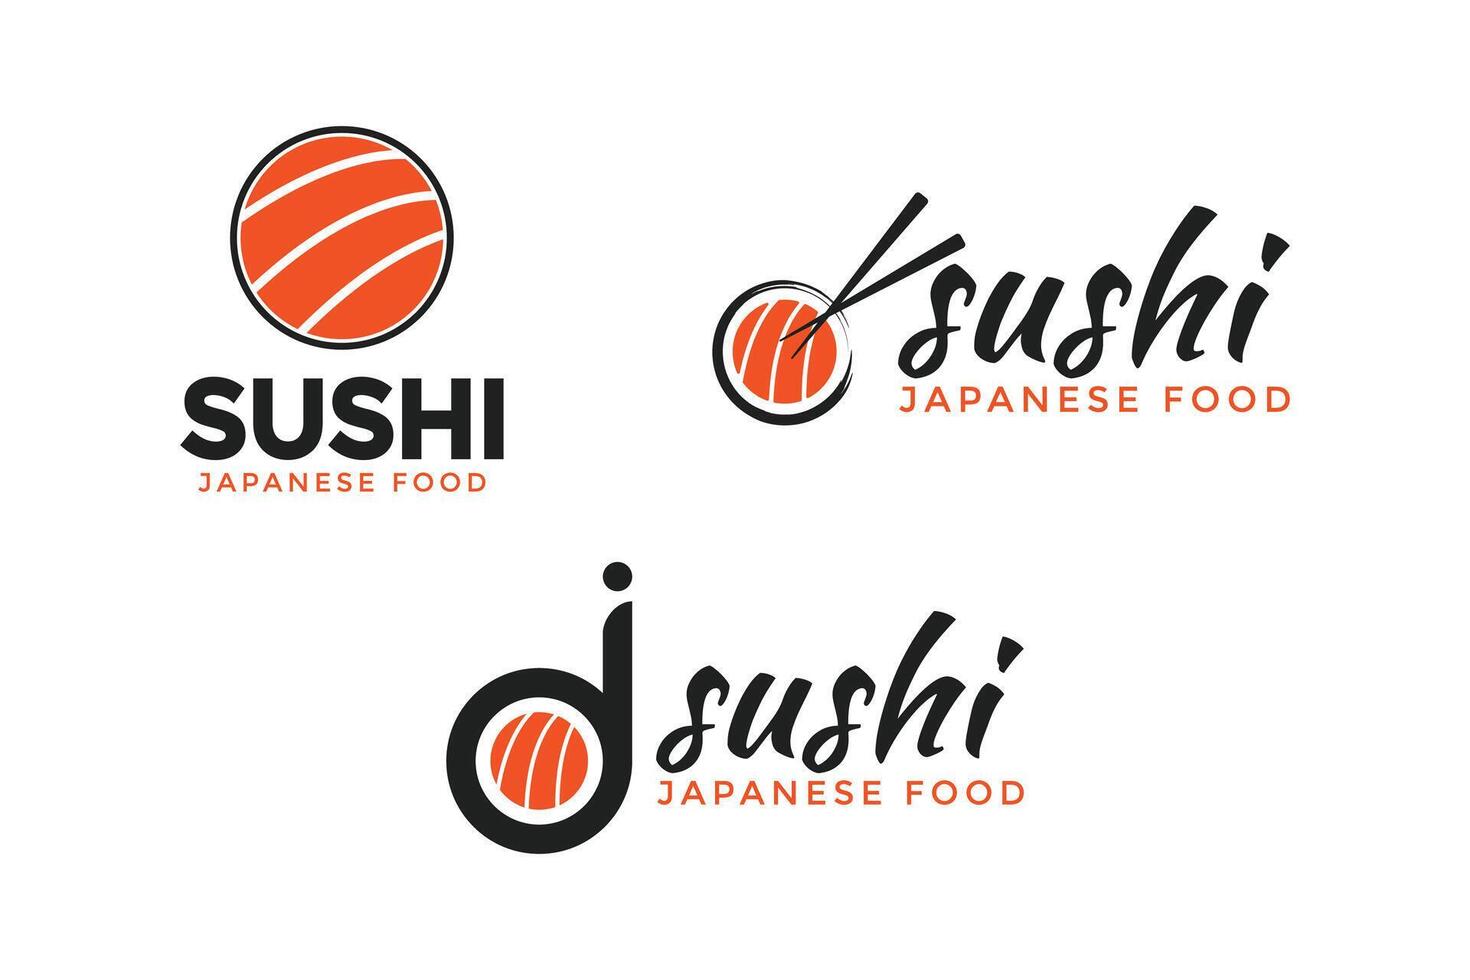 reeks van sushi Japans voedsel met Zalm vis logo ontwerp vector sjabloon